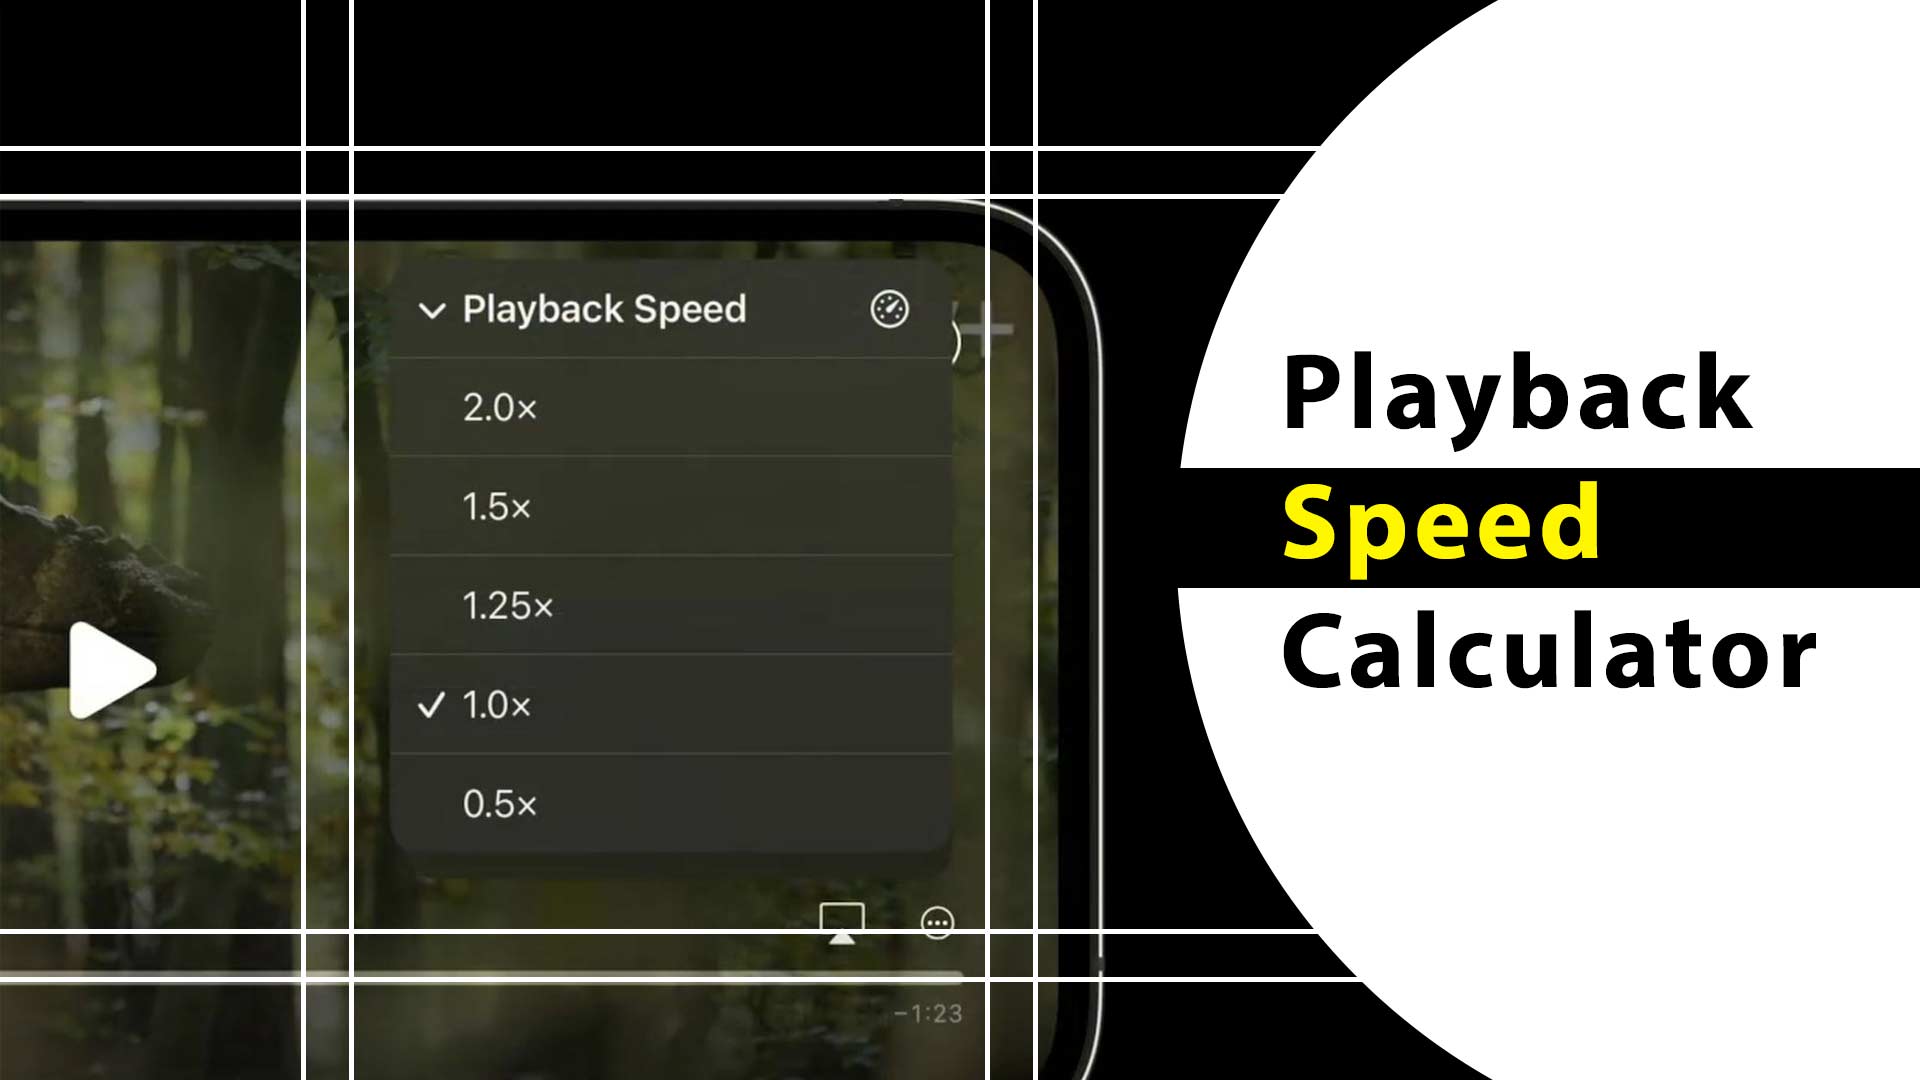 Playback Speed Calculator